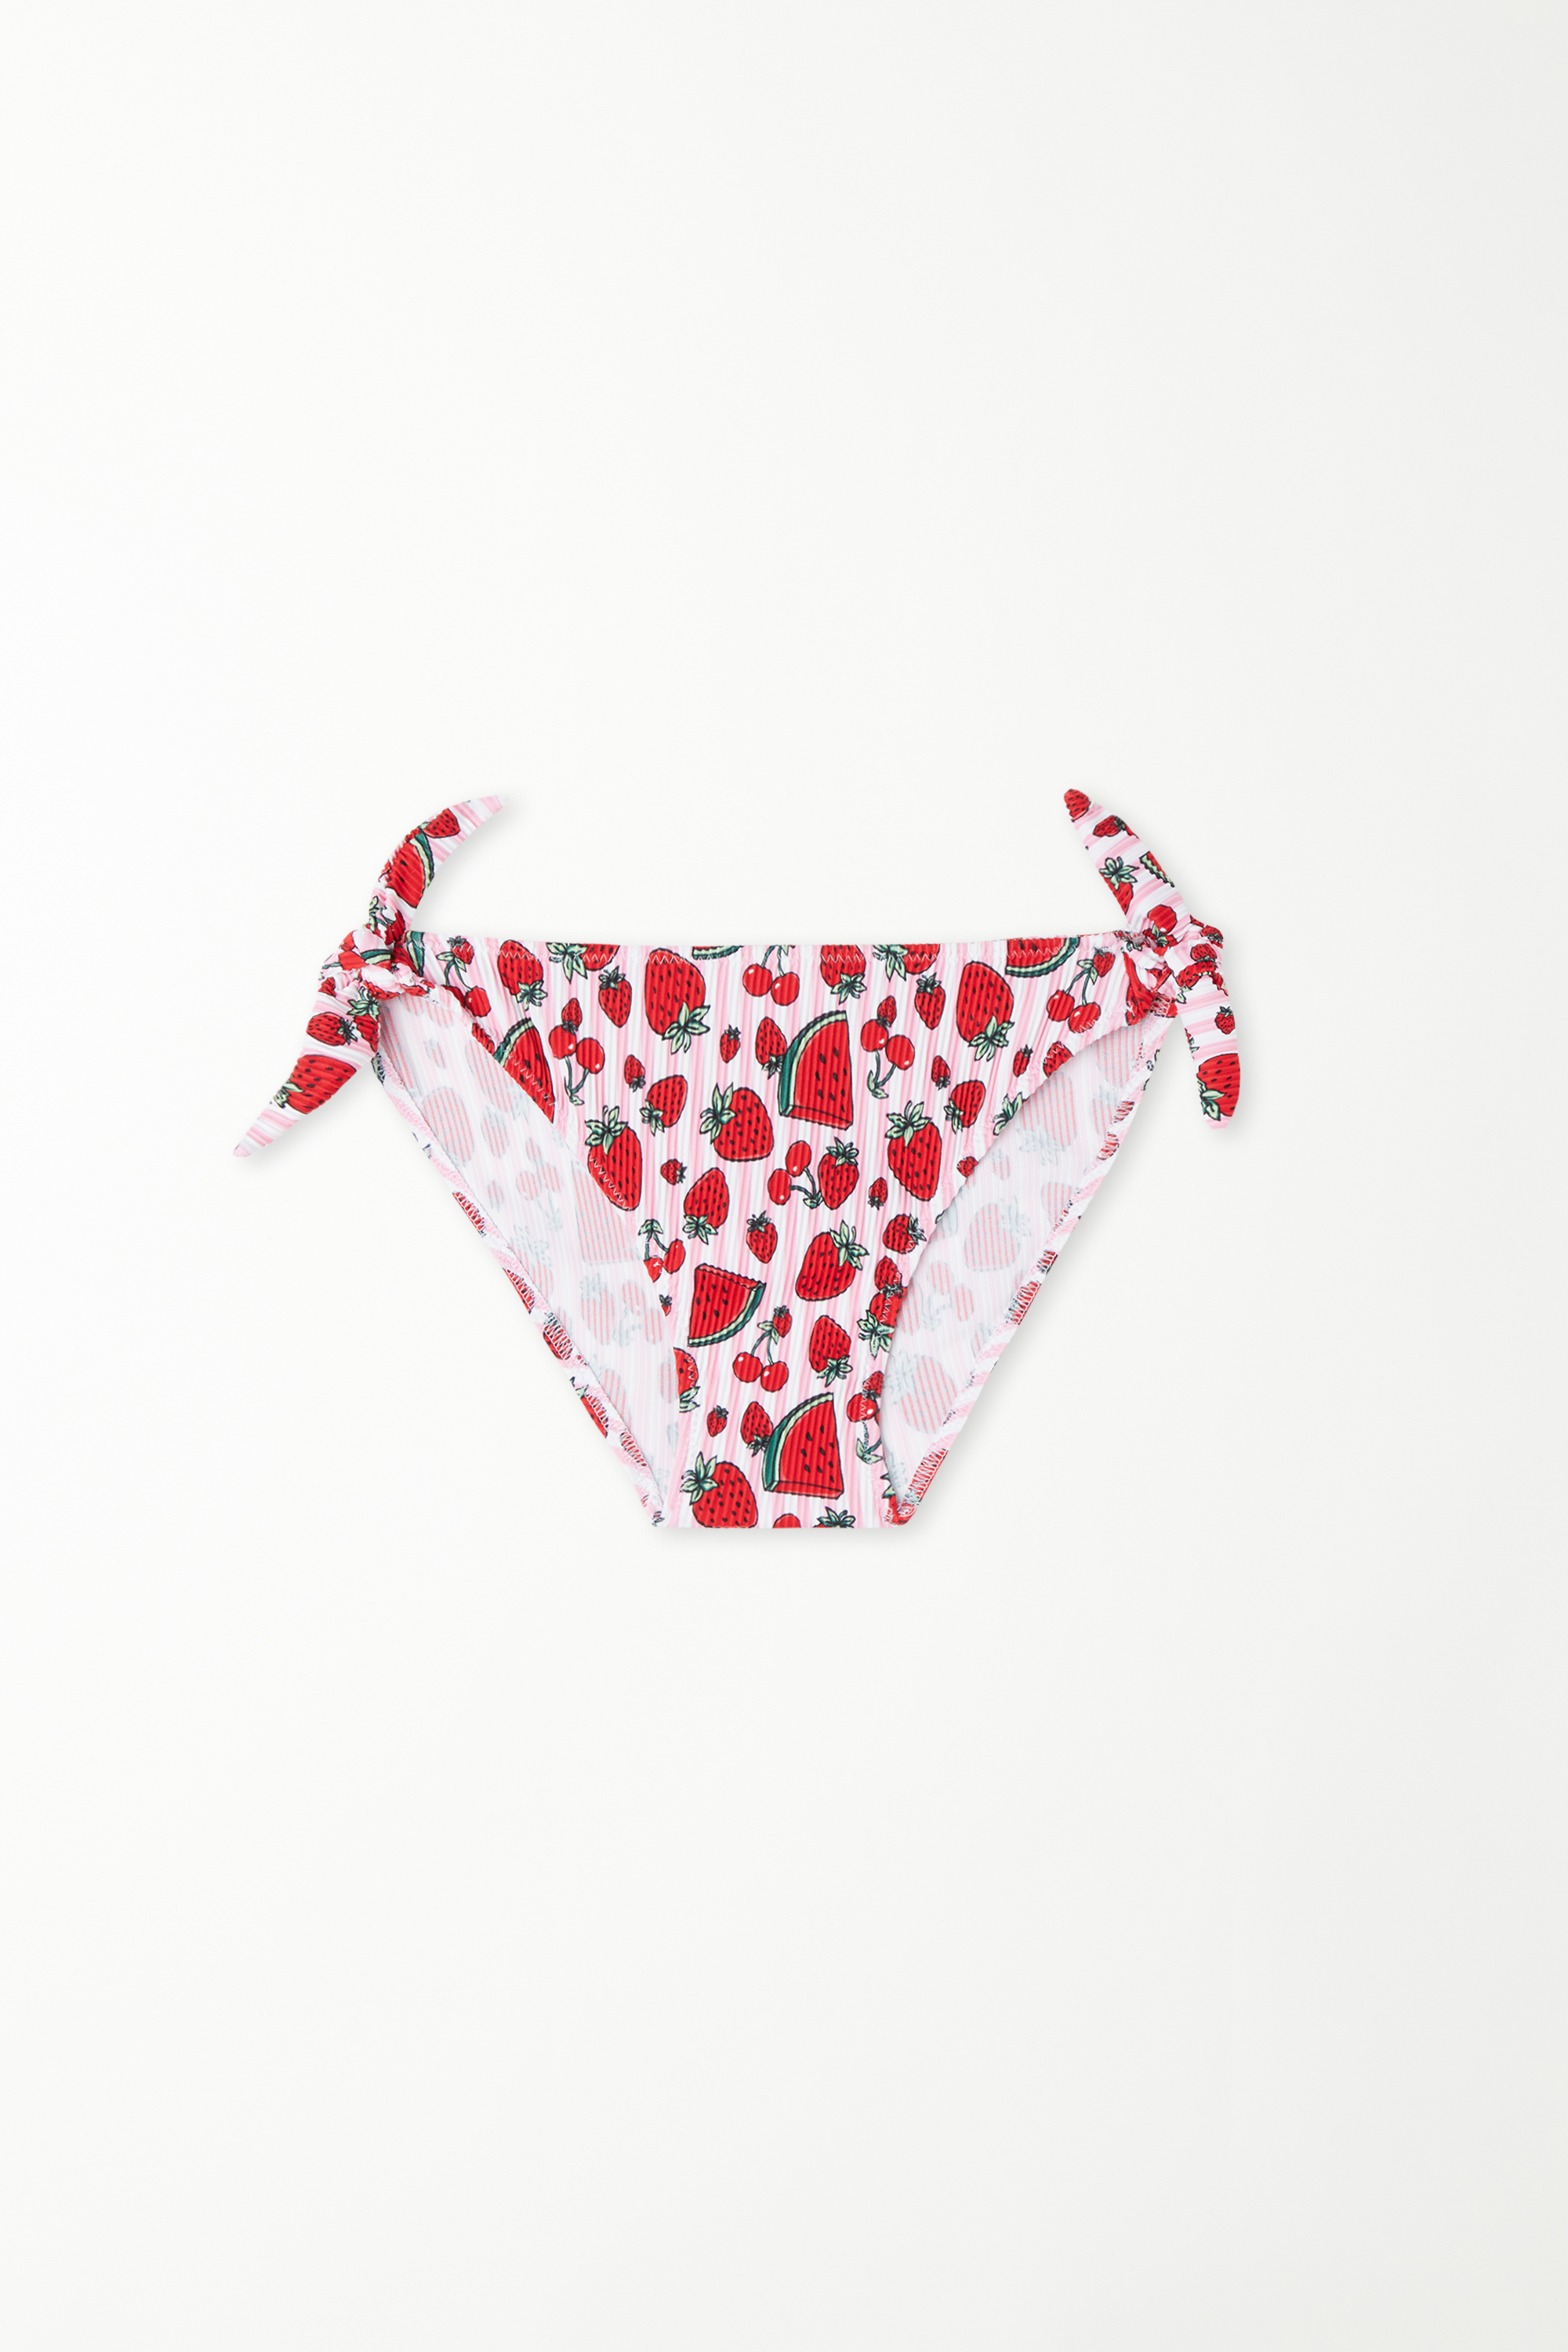 Girls’ Stripes and Fruit Print Bikini Top and Tie Bottoms